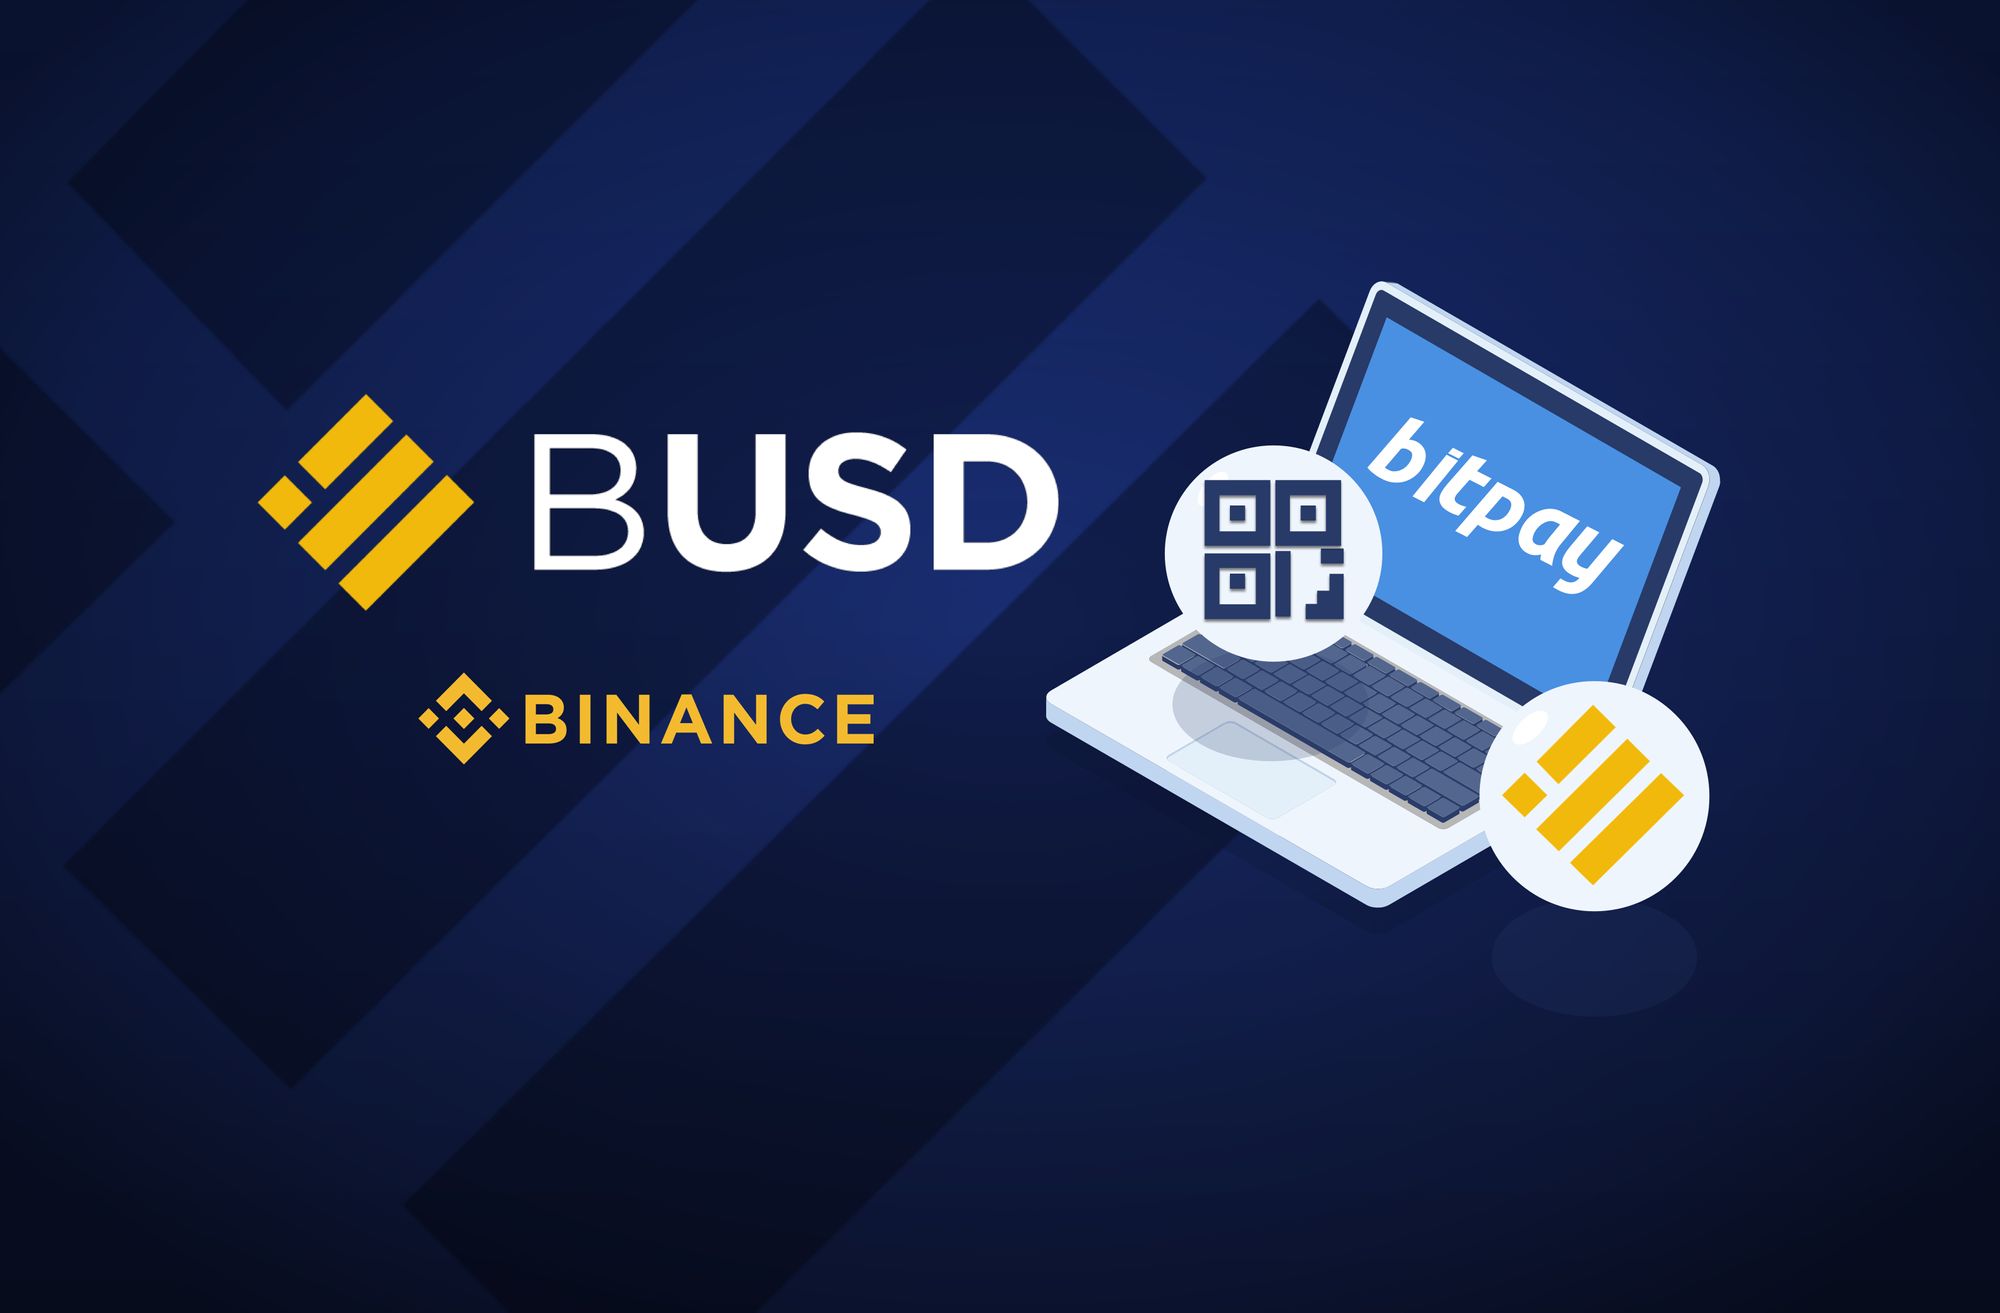 BitPay Binance Partnership Brings BUSD to BitPay’s Global ...